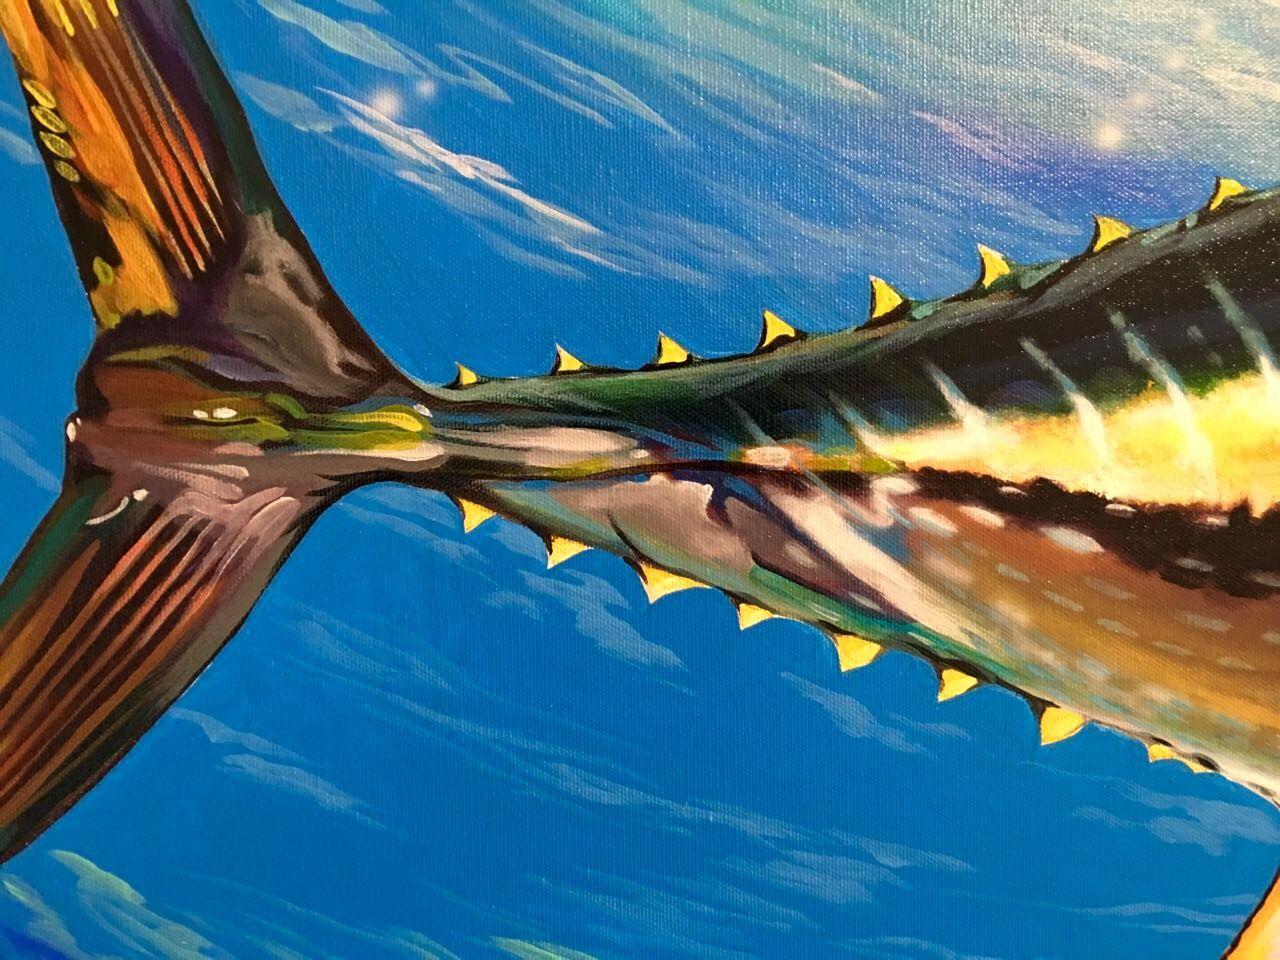 Yellowfin Tuna (close up) by Clint Eagar. Art in 2019